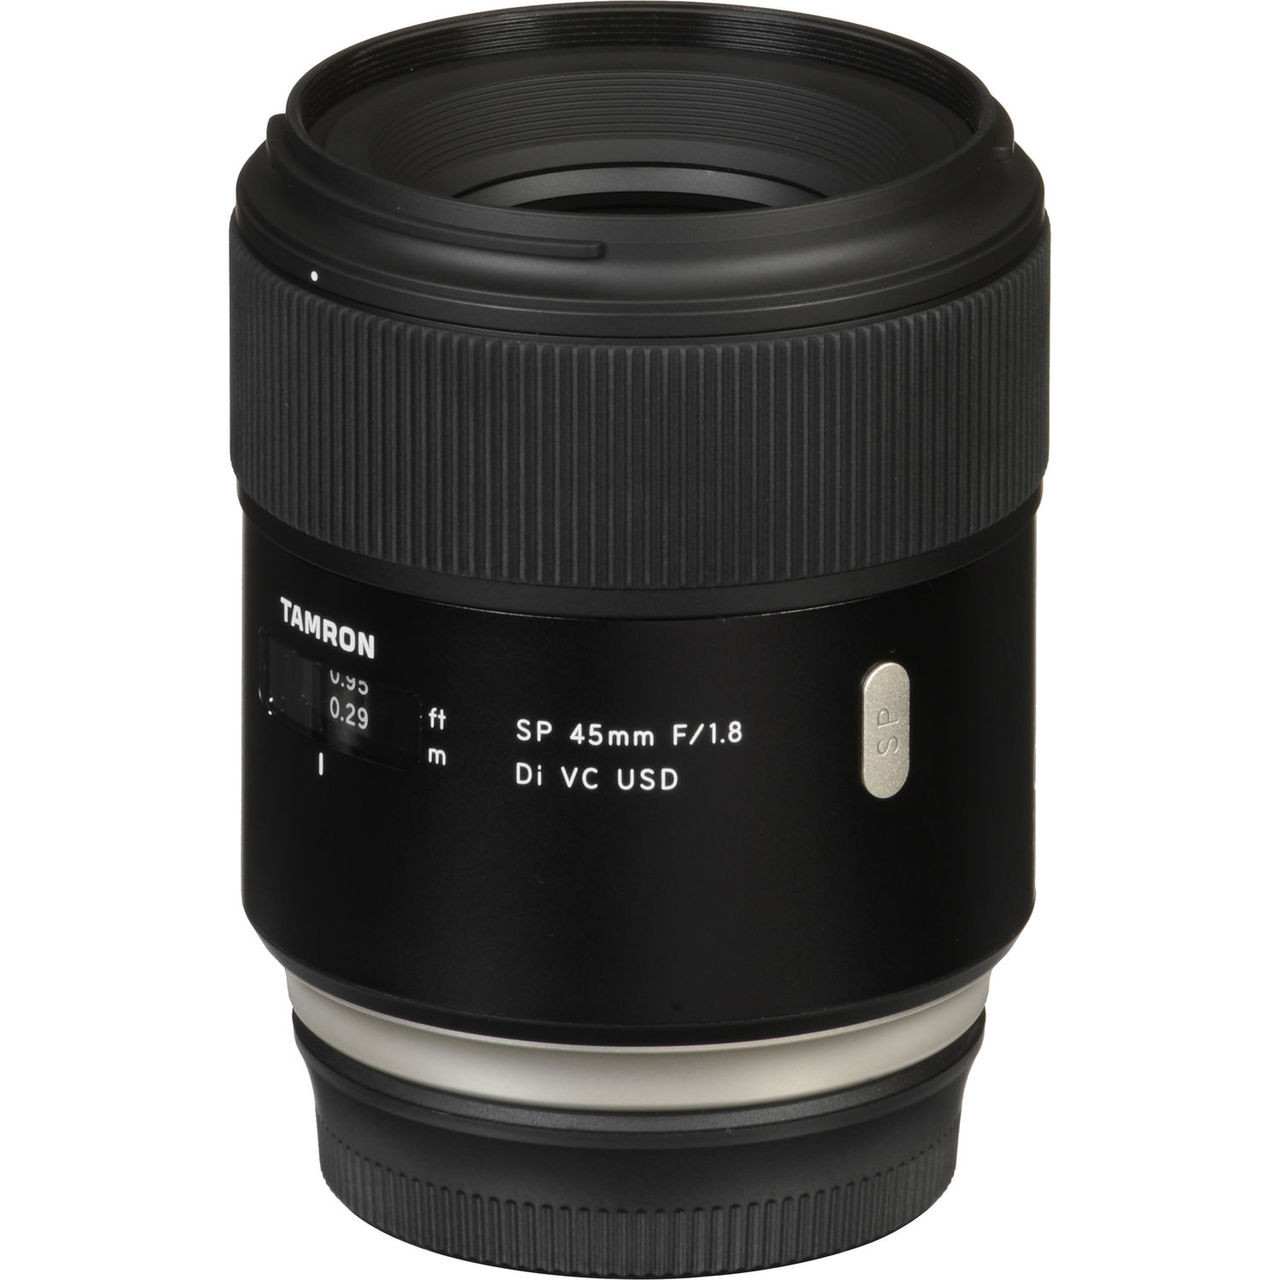 Tamron SP 45mm F1.8 Di VC USD Lens for Nikon (New) - Camera Lane